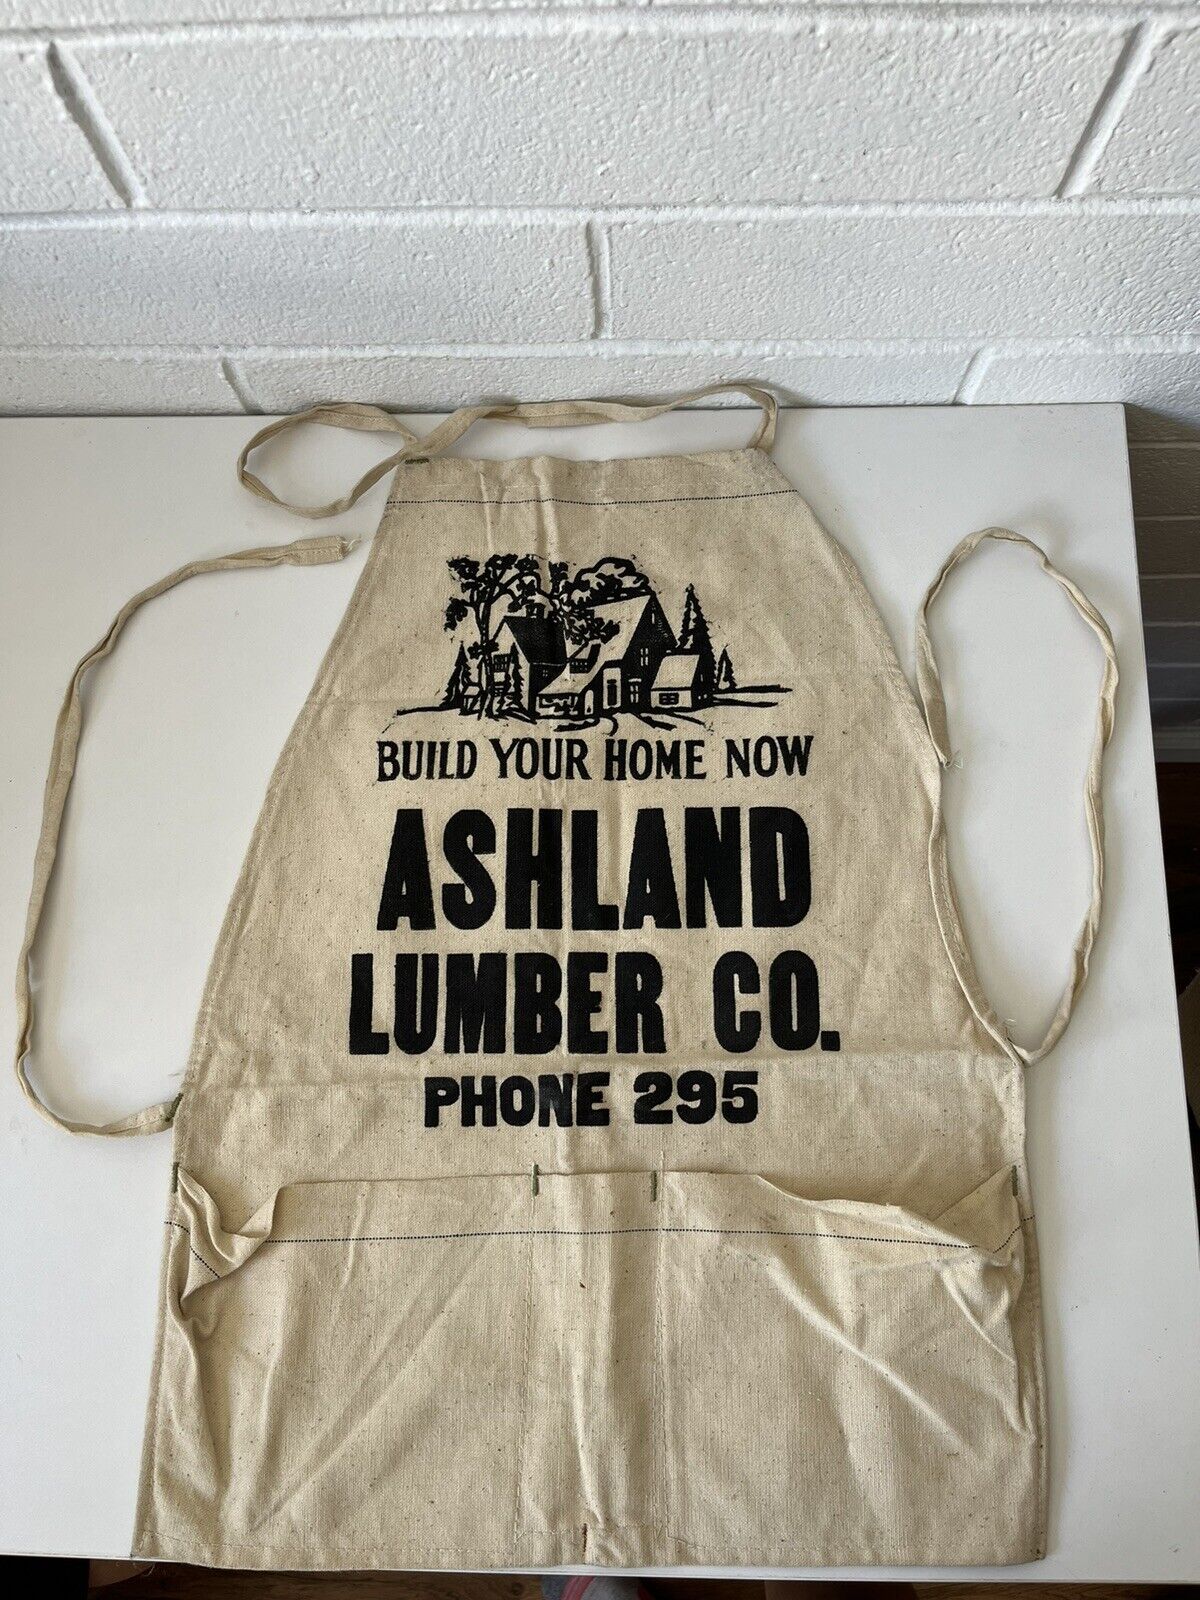 Rare Vintage Ashland Lumber Company Apron “Build Your Home Now” Full Size Apron 